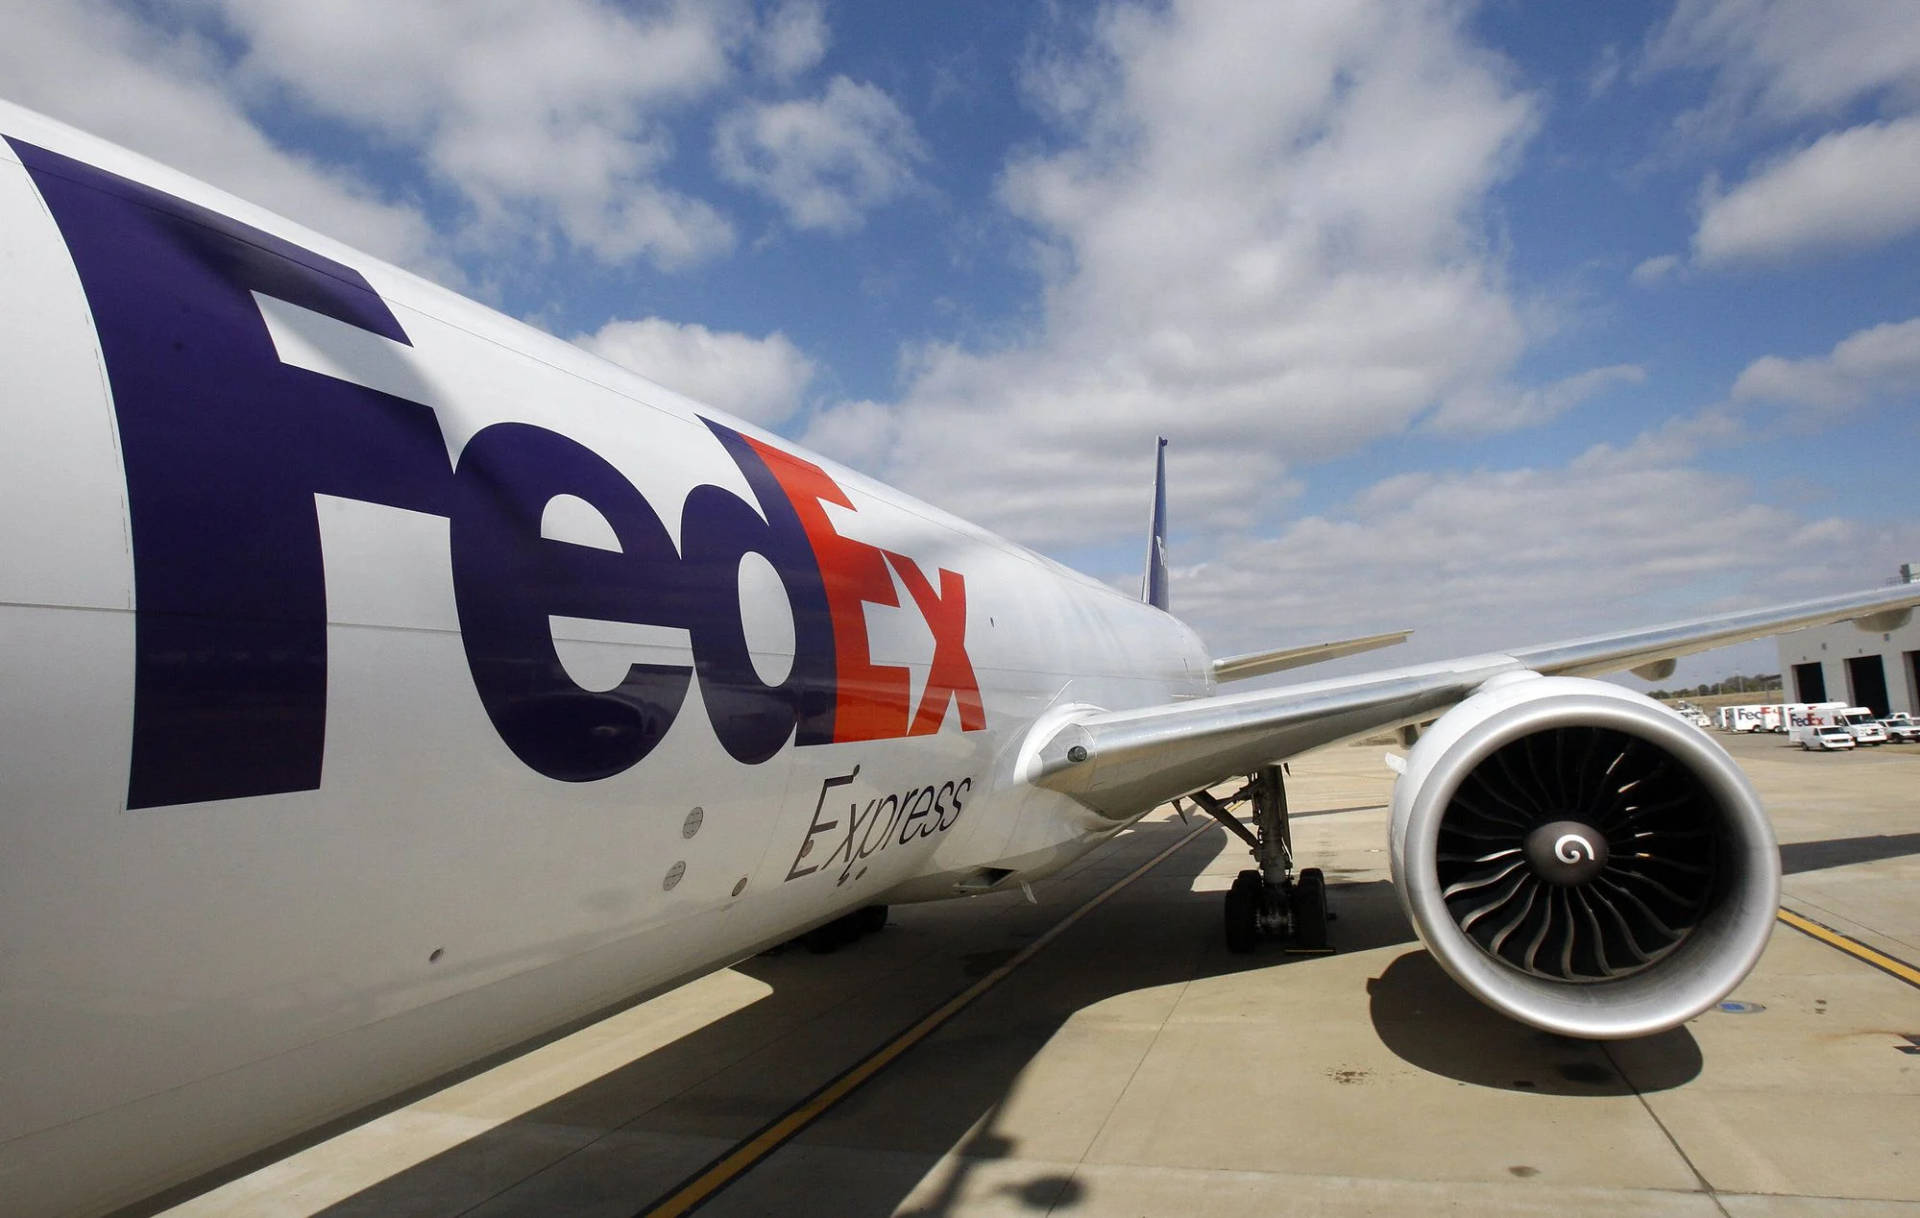 Close-Up FedEx Tracking Aircraft Wallpaper